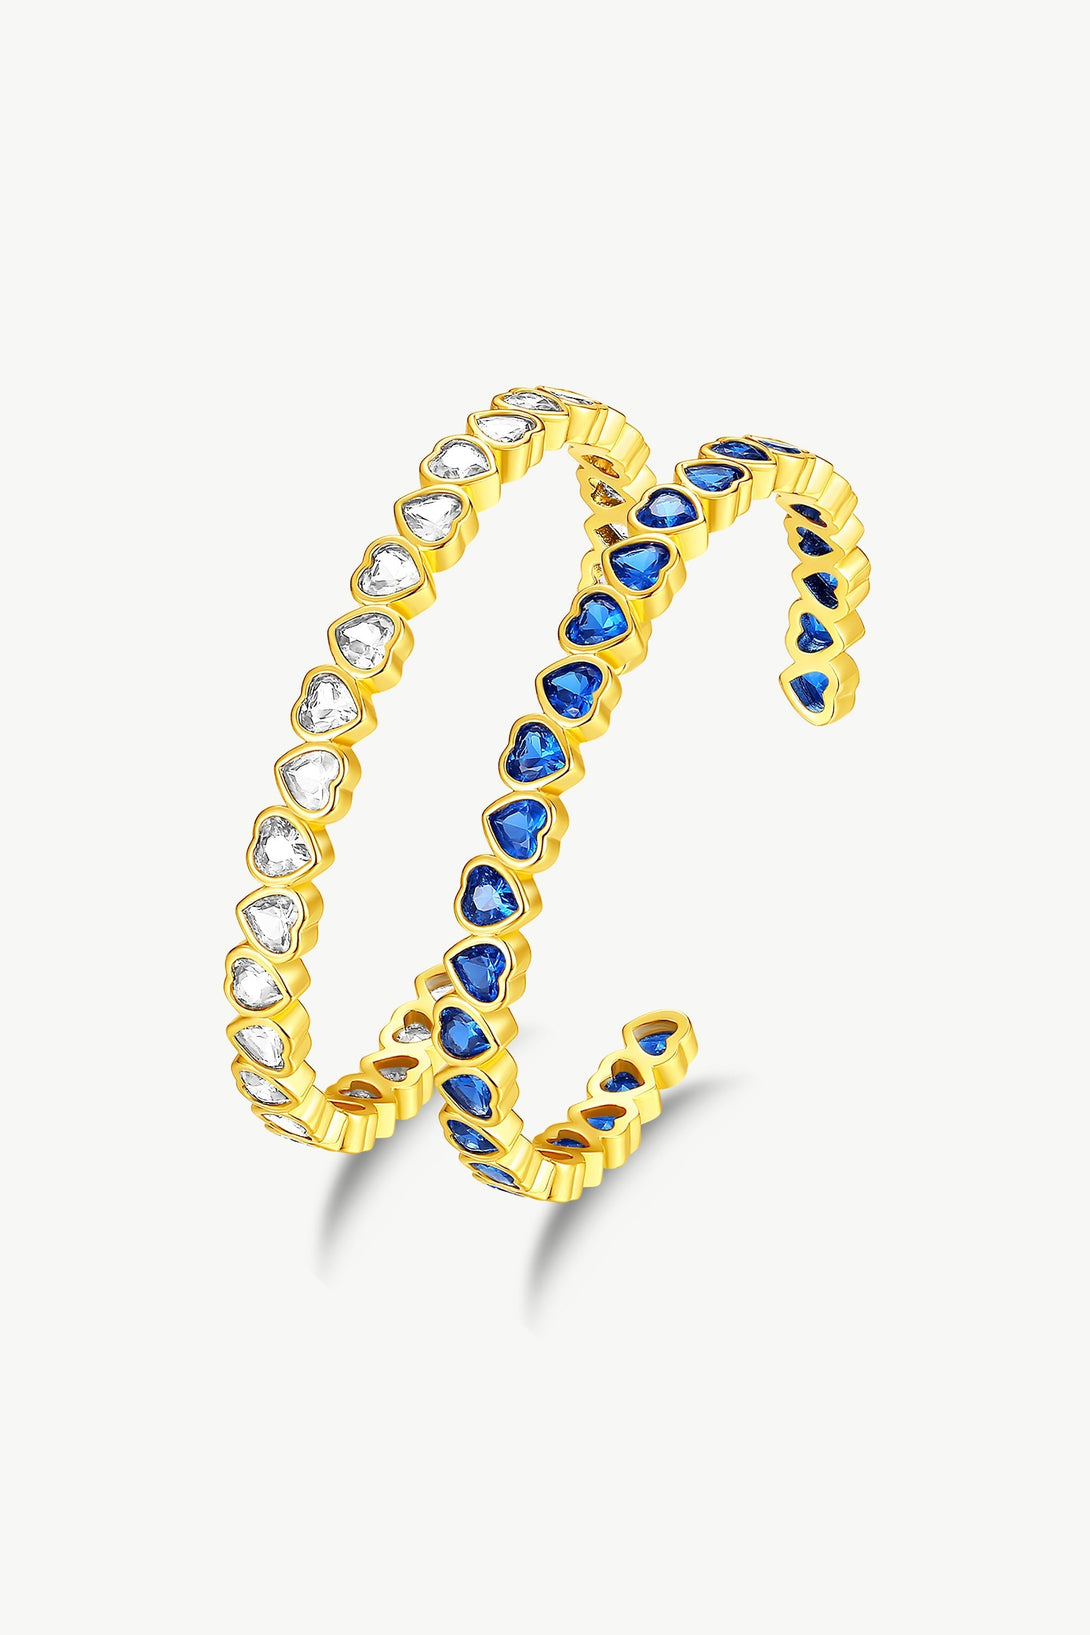 Gold Heart Shaped Zirconia Bangle Bracelet Set - Classicharms